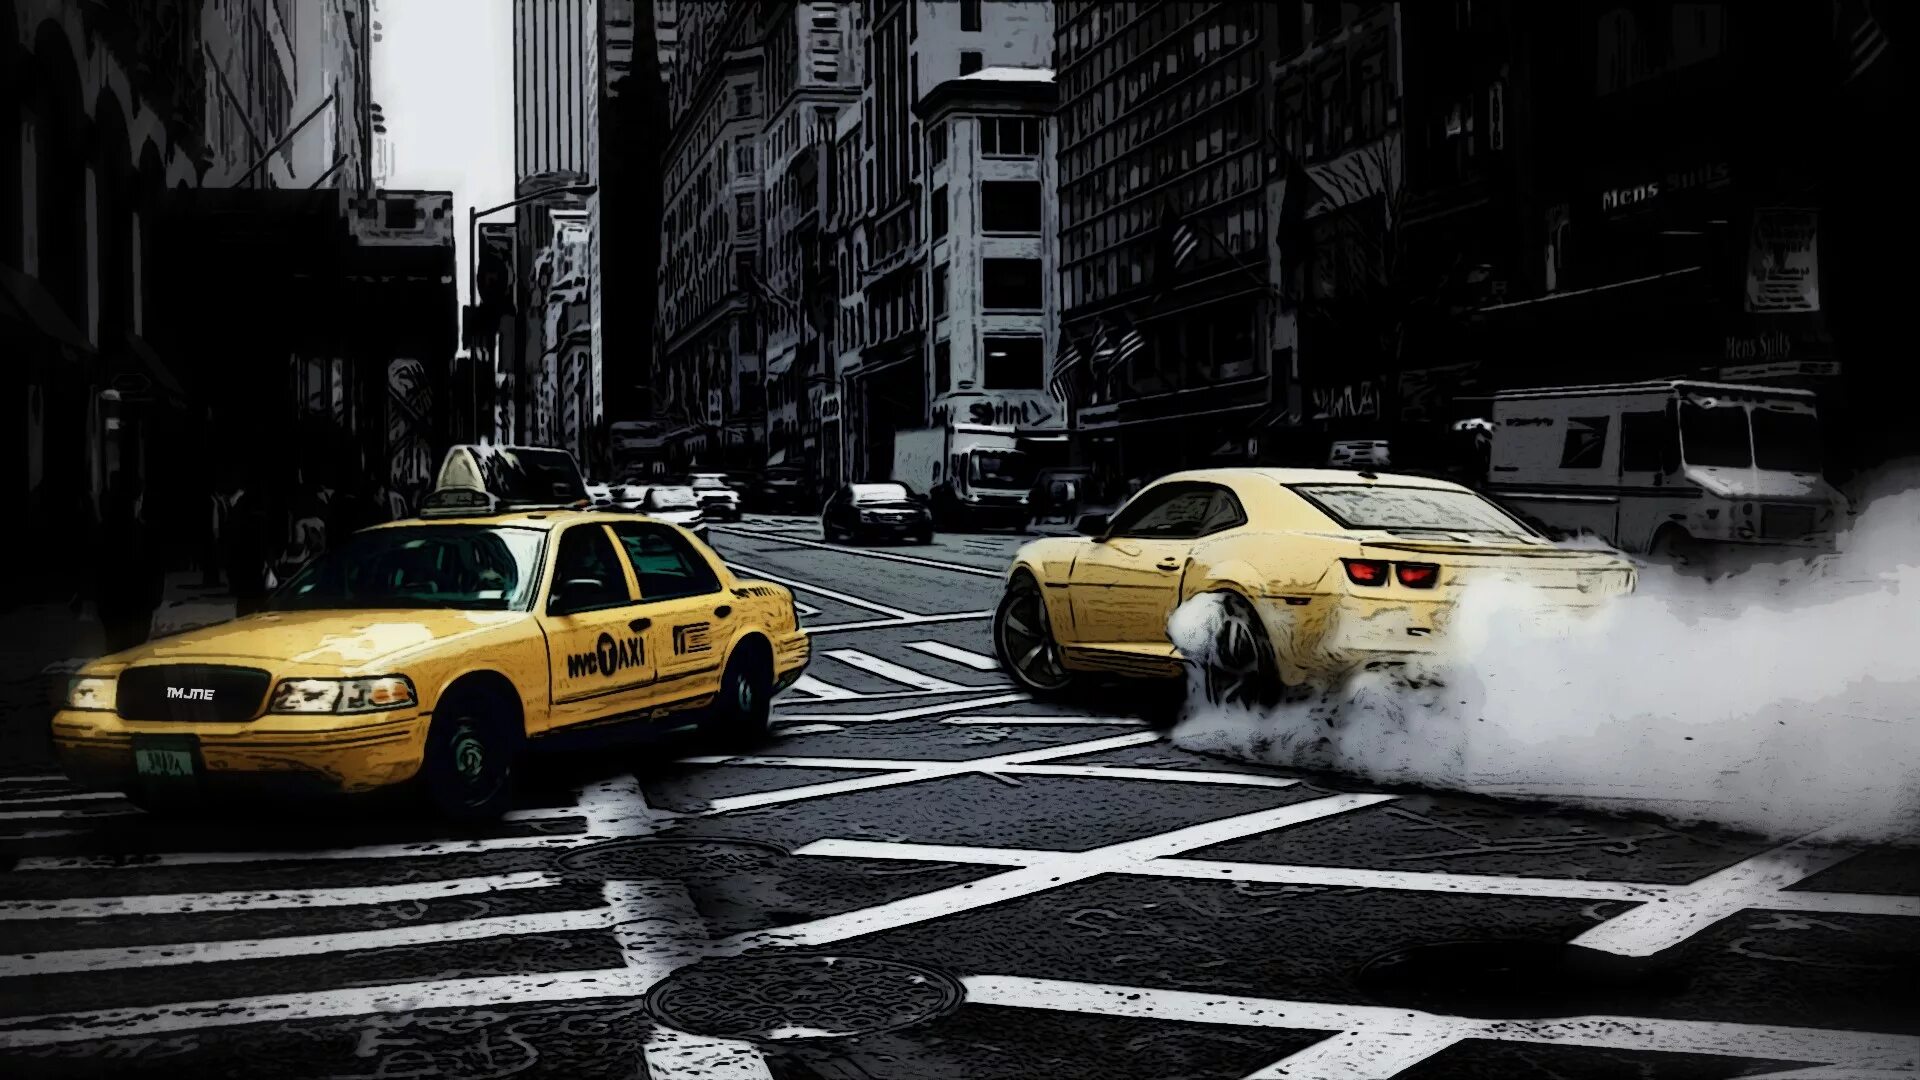 Таксопарк в Нью-Йорке. Дрифт в Нью-Йорке. Нью-Йоркское такси / Taxi.. Tomorrow they to new york